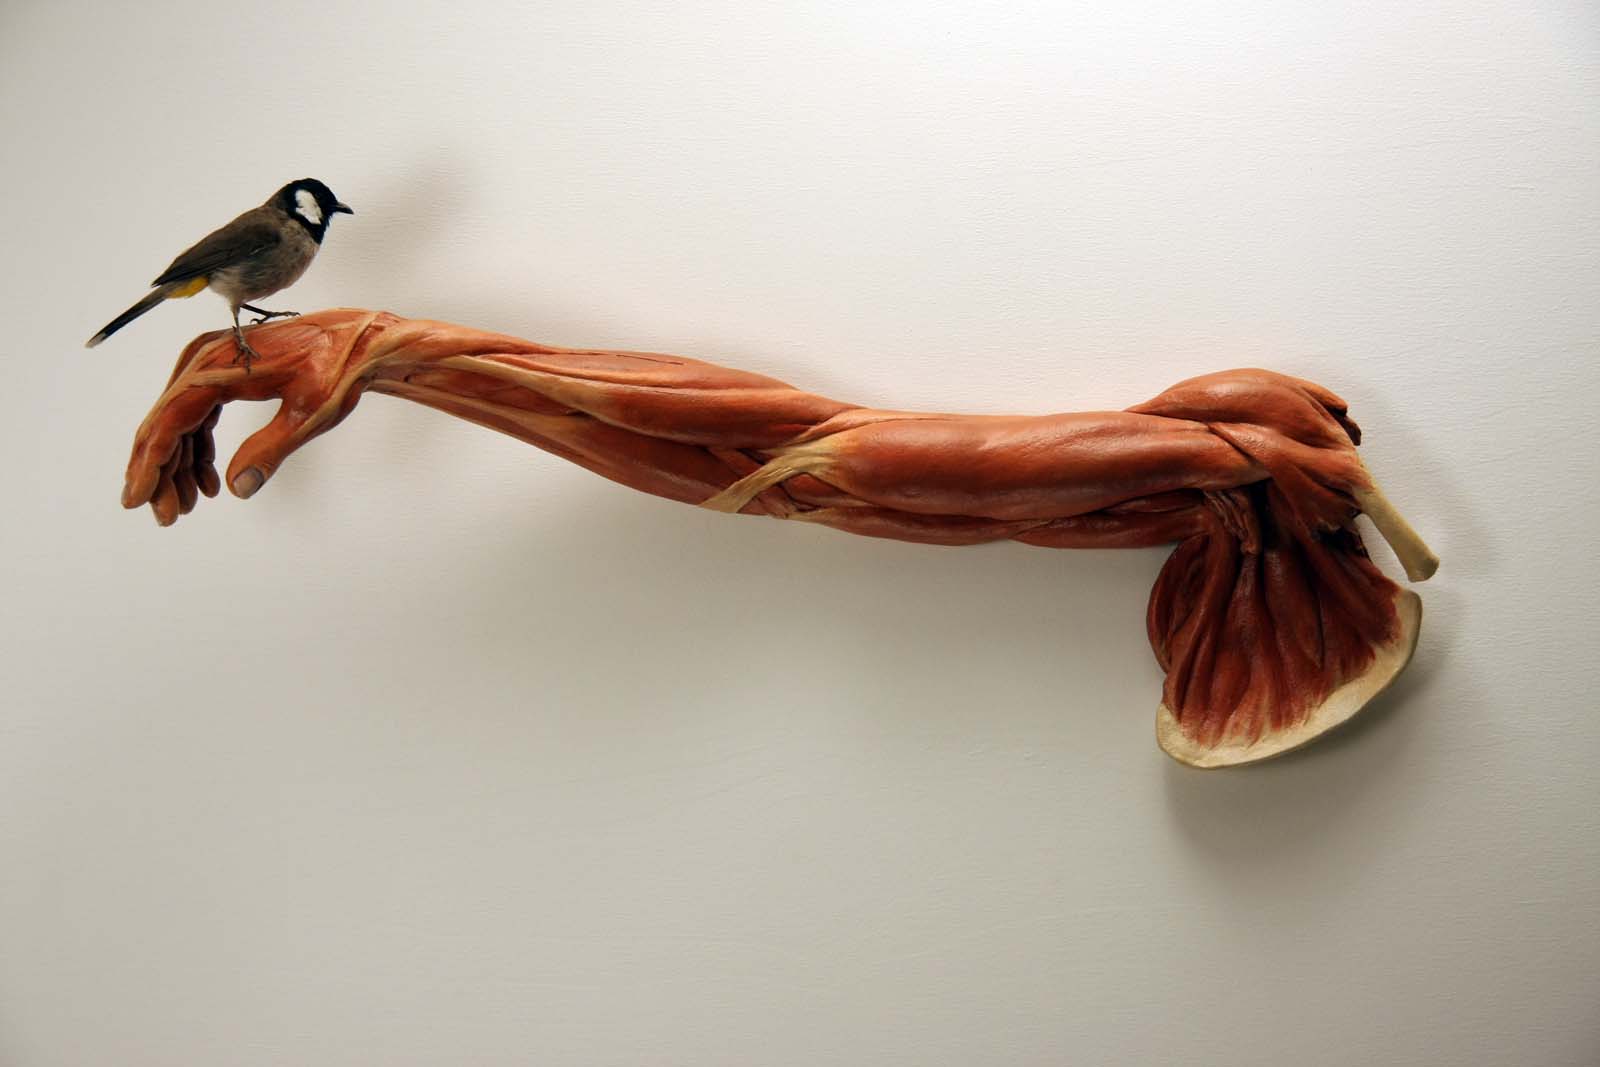 Premonition Anatomy Muscles Portland art museum Contemporary Ceramics Bird Sculpture by artist Dirk Staschke